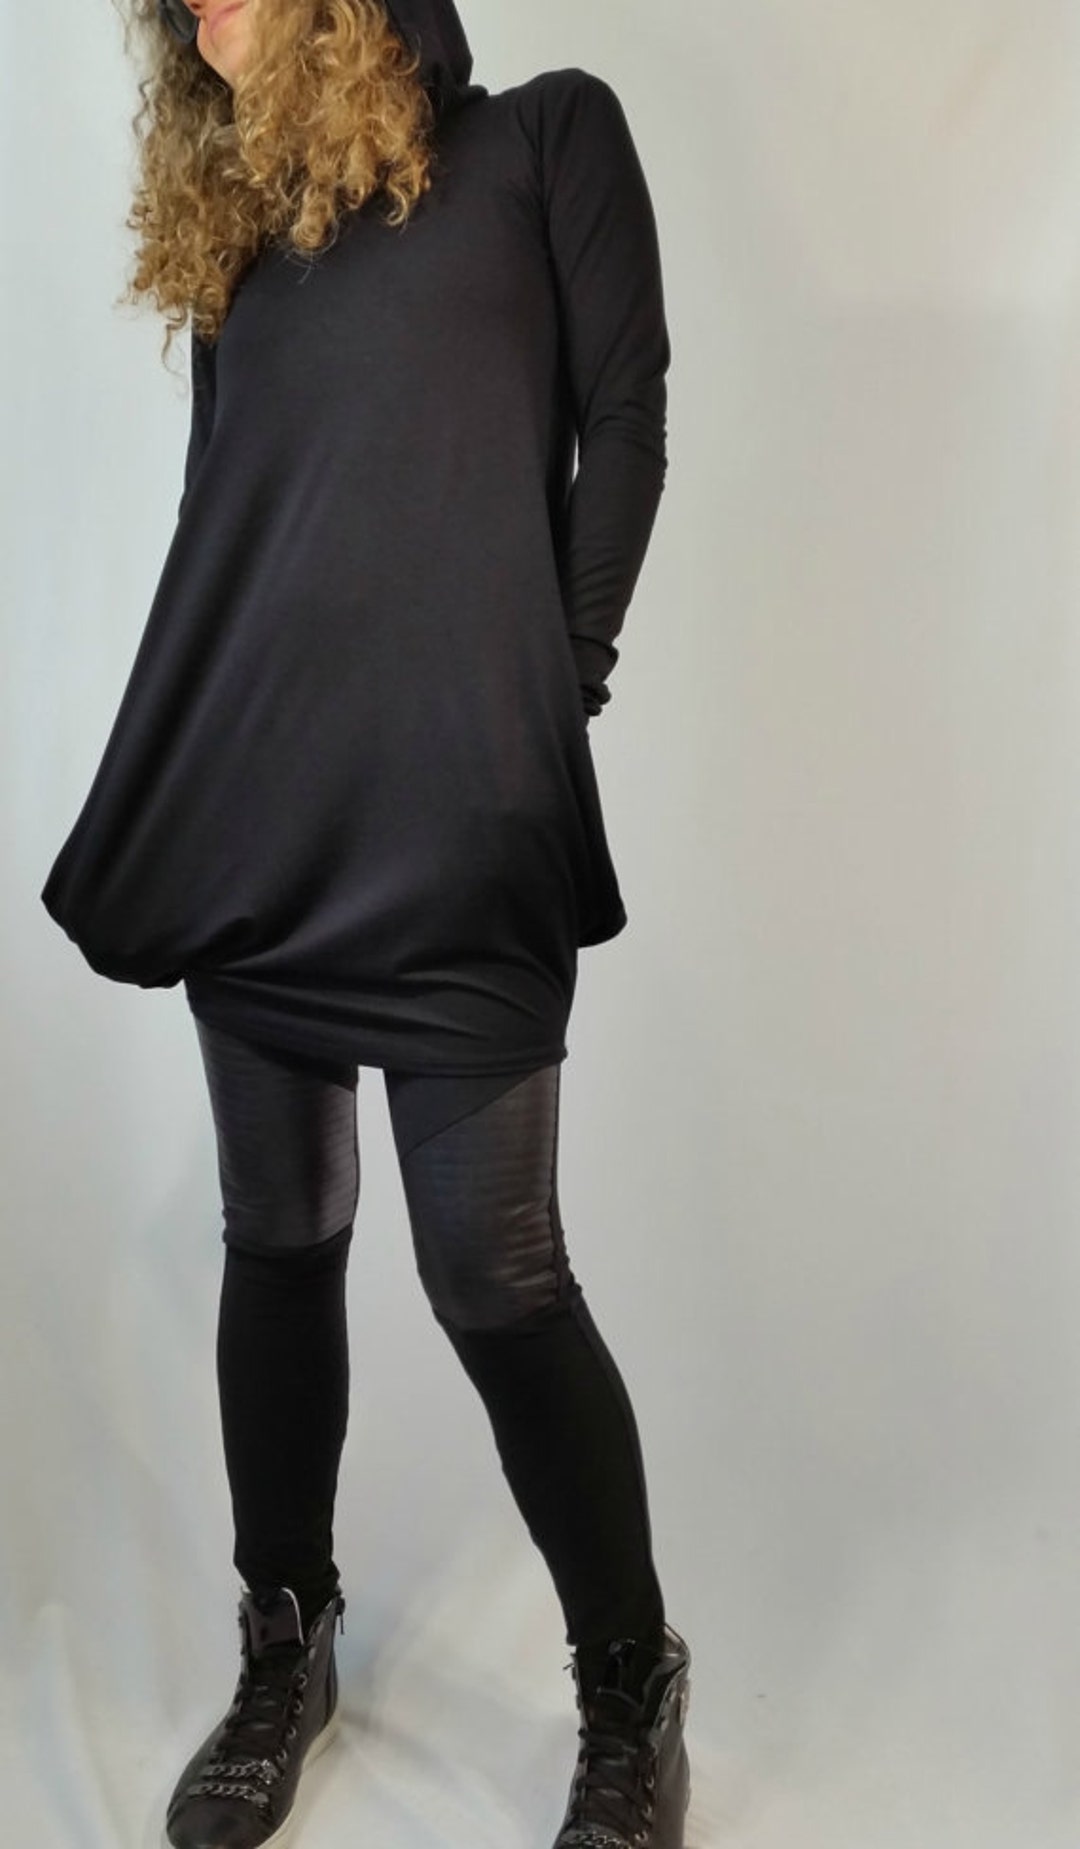 Loose Hooded Top / Long Sleeves Women Top / Sweater Dress / - Etsy